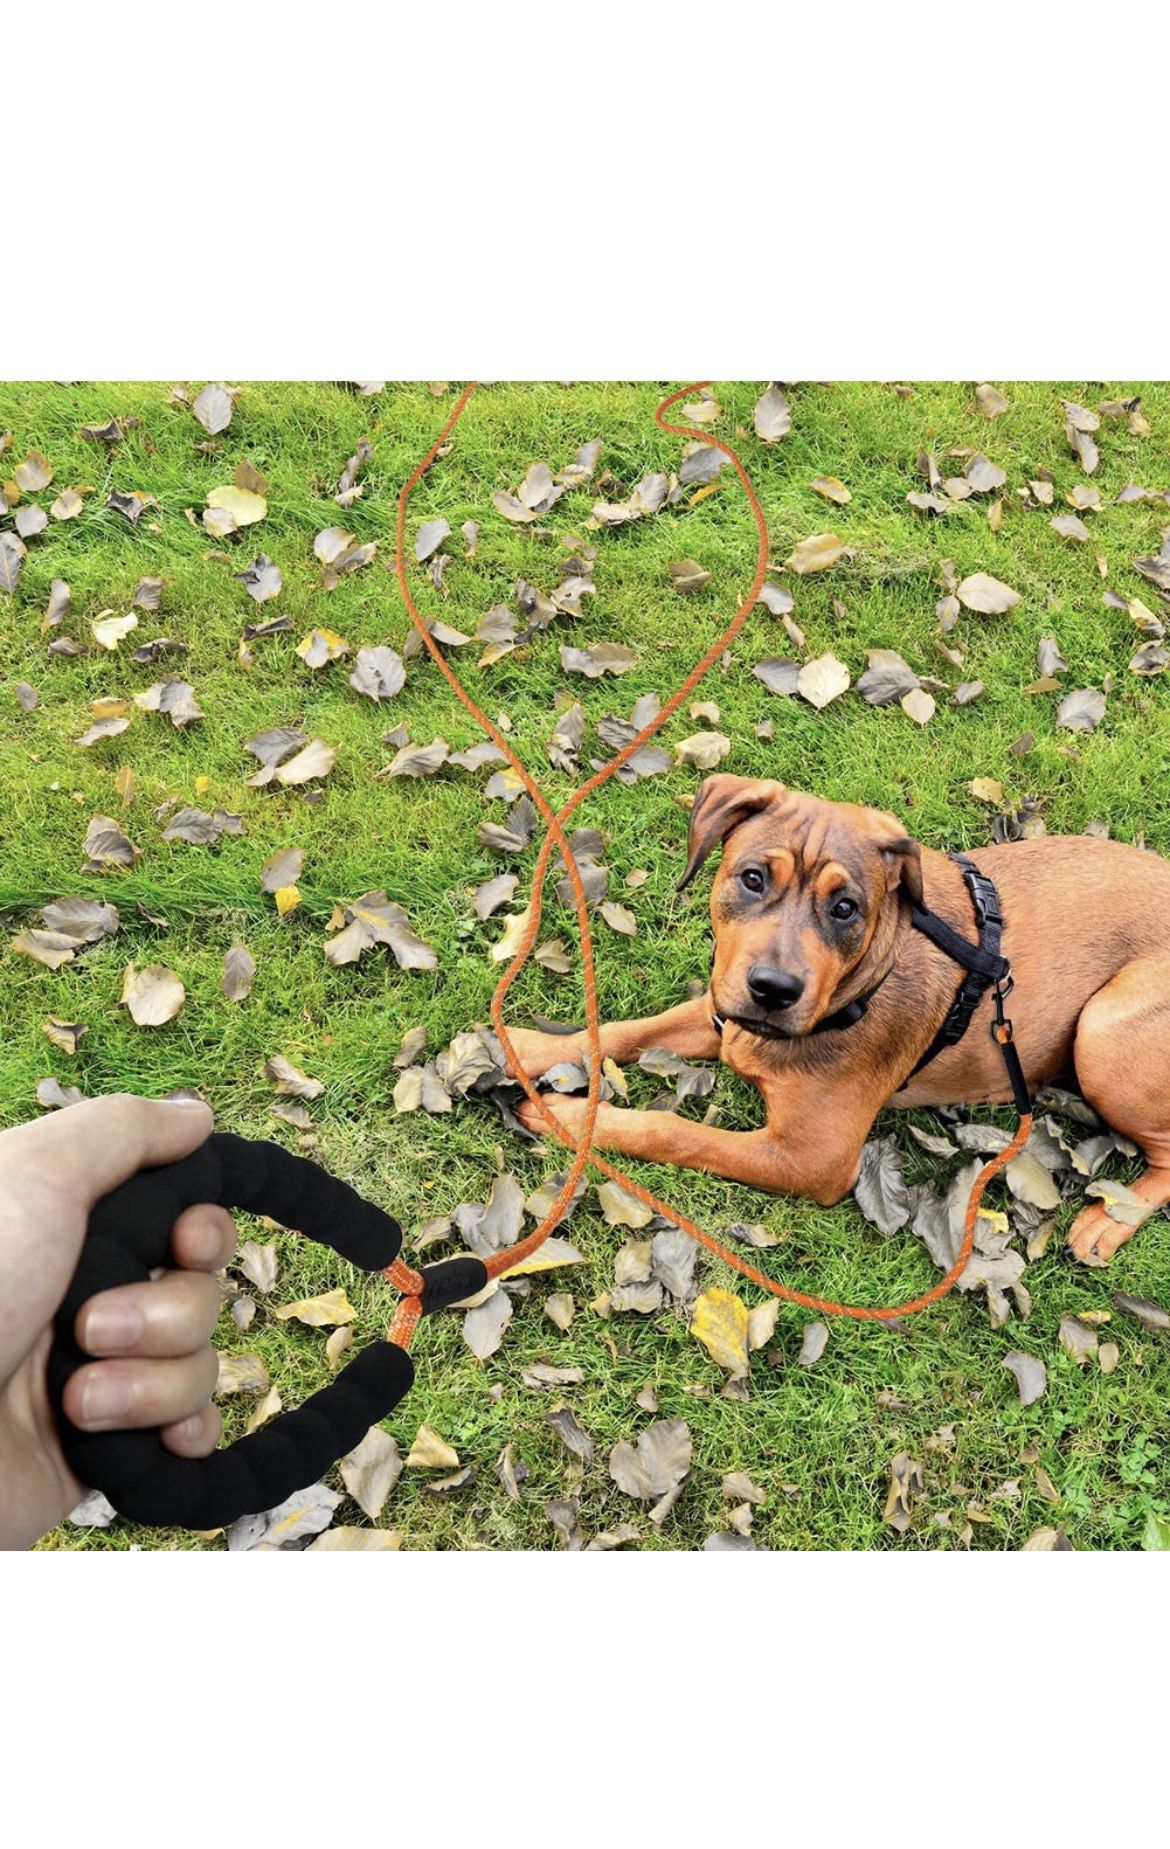 Taglory Dog Training Leash,Long Dog Rope Leash - 15 Ft